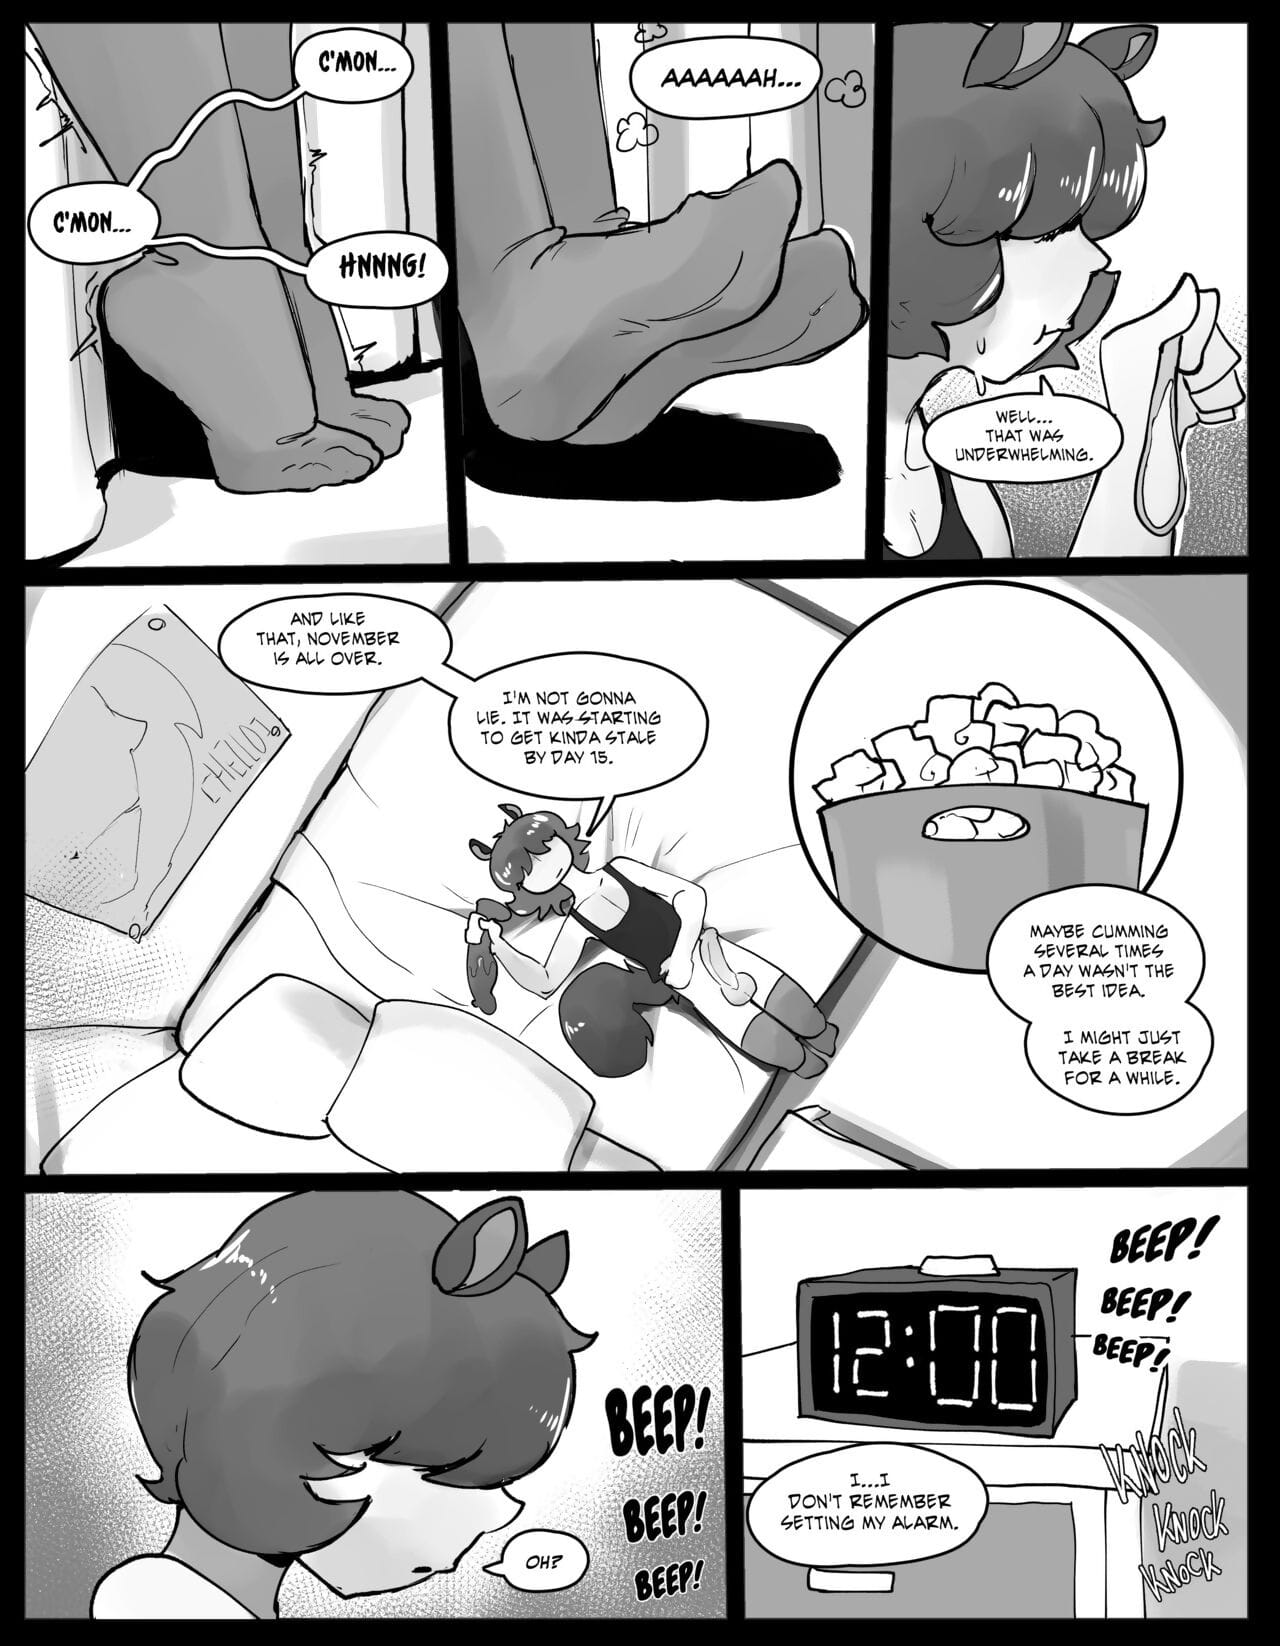 Nutty November page 1